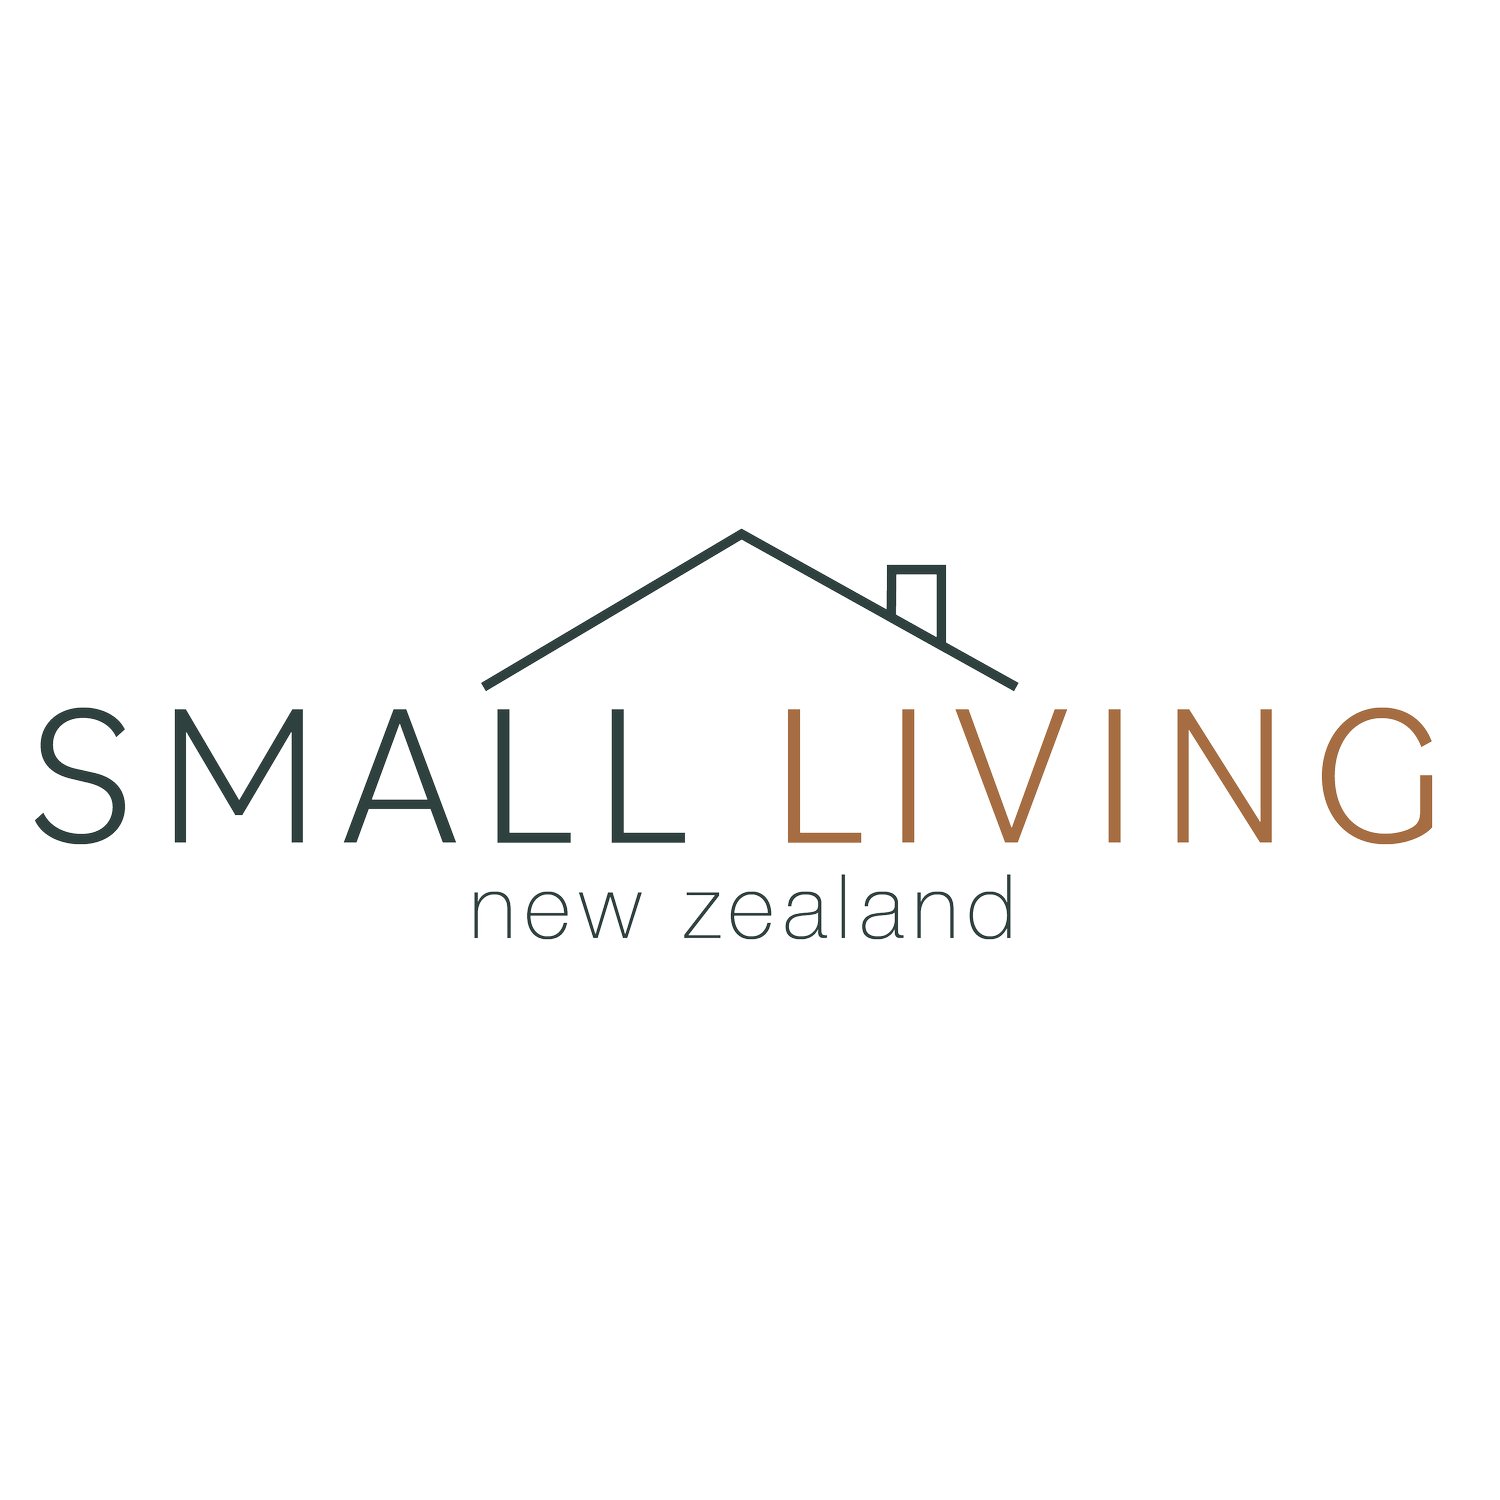 SMALL LIVING NZ